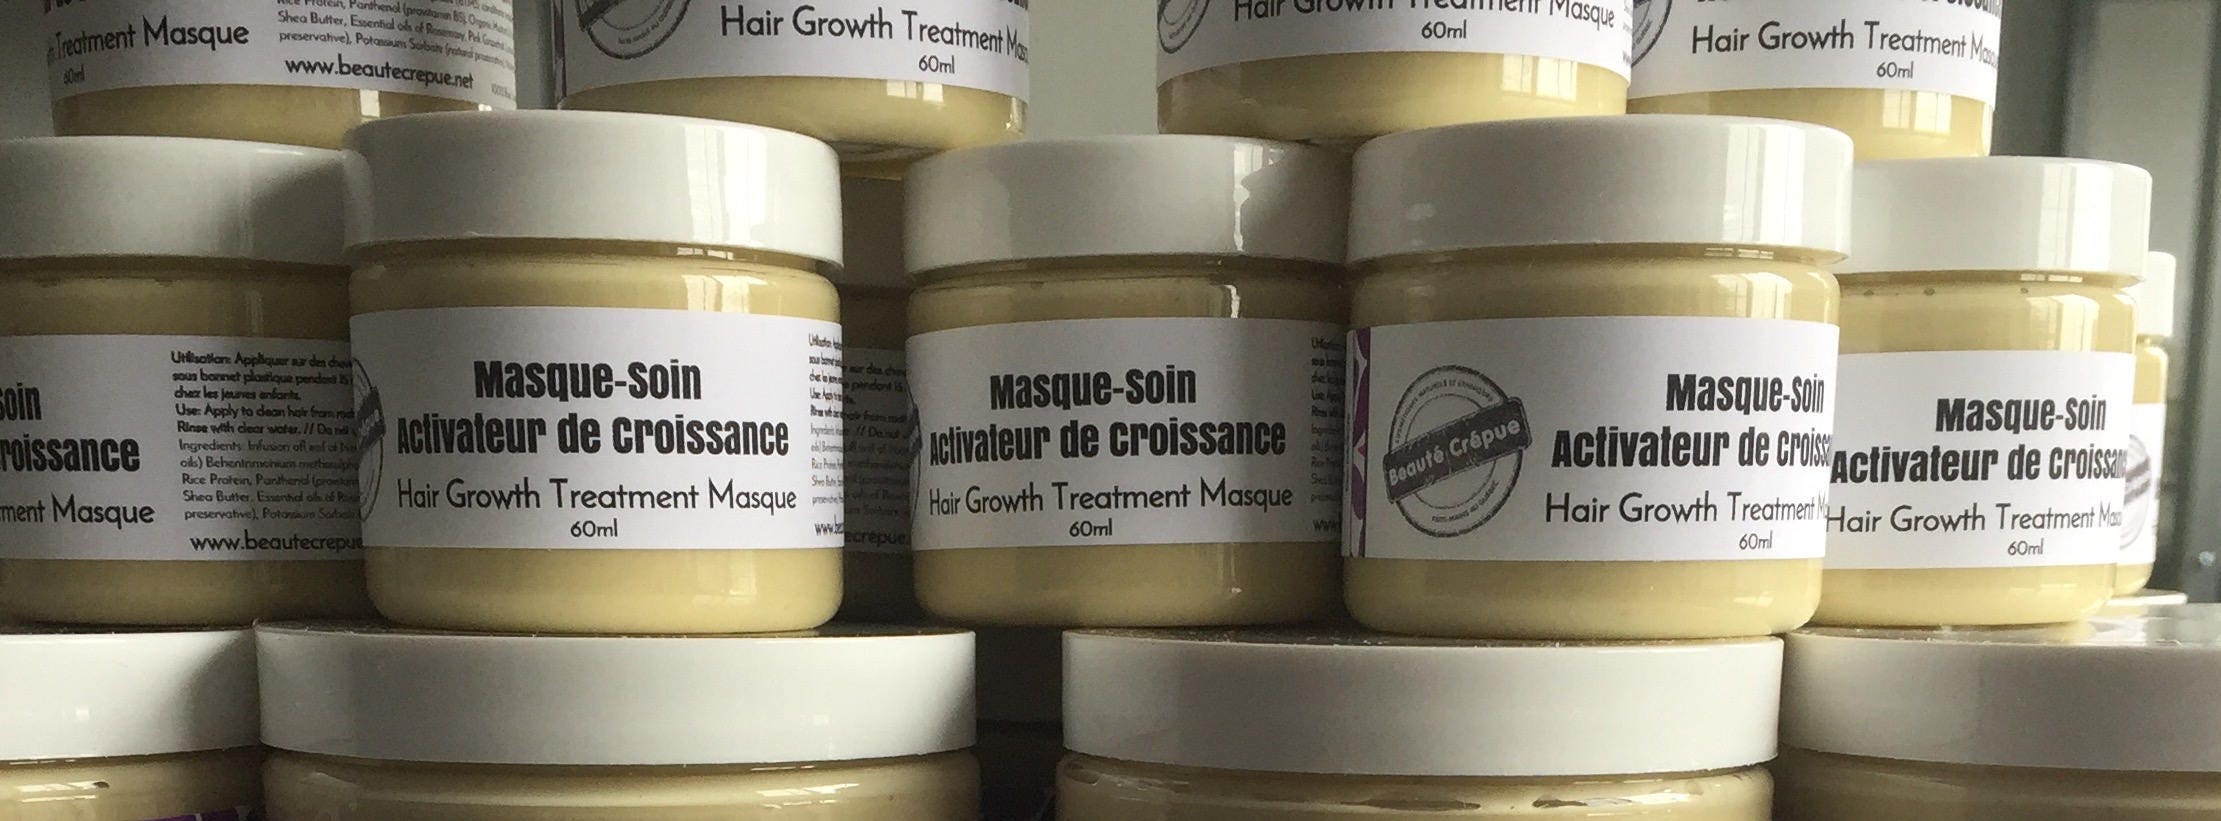 Hair Growth Treatment Masque With Jamaican Black Castor Oil